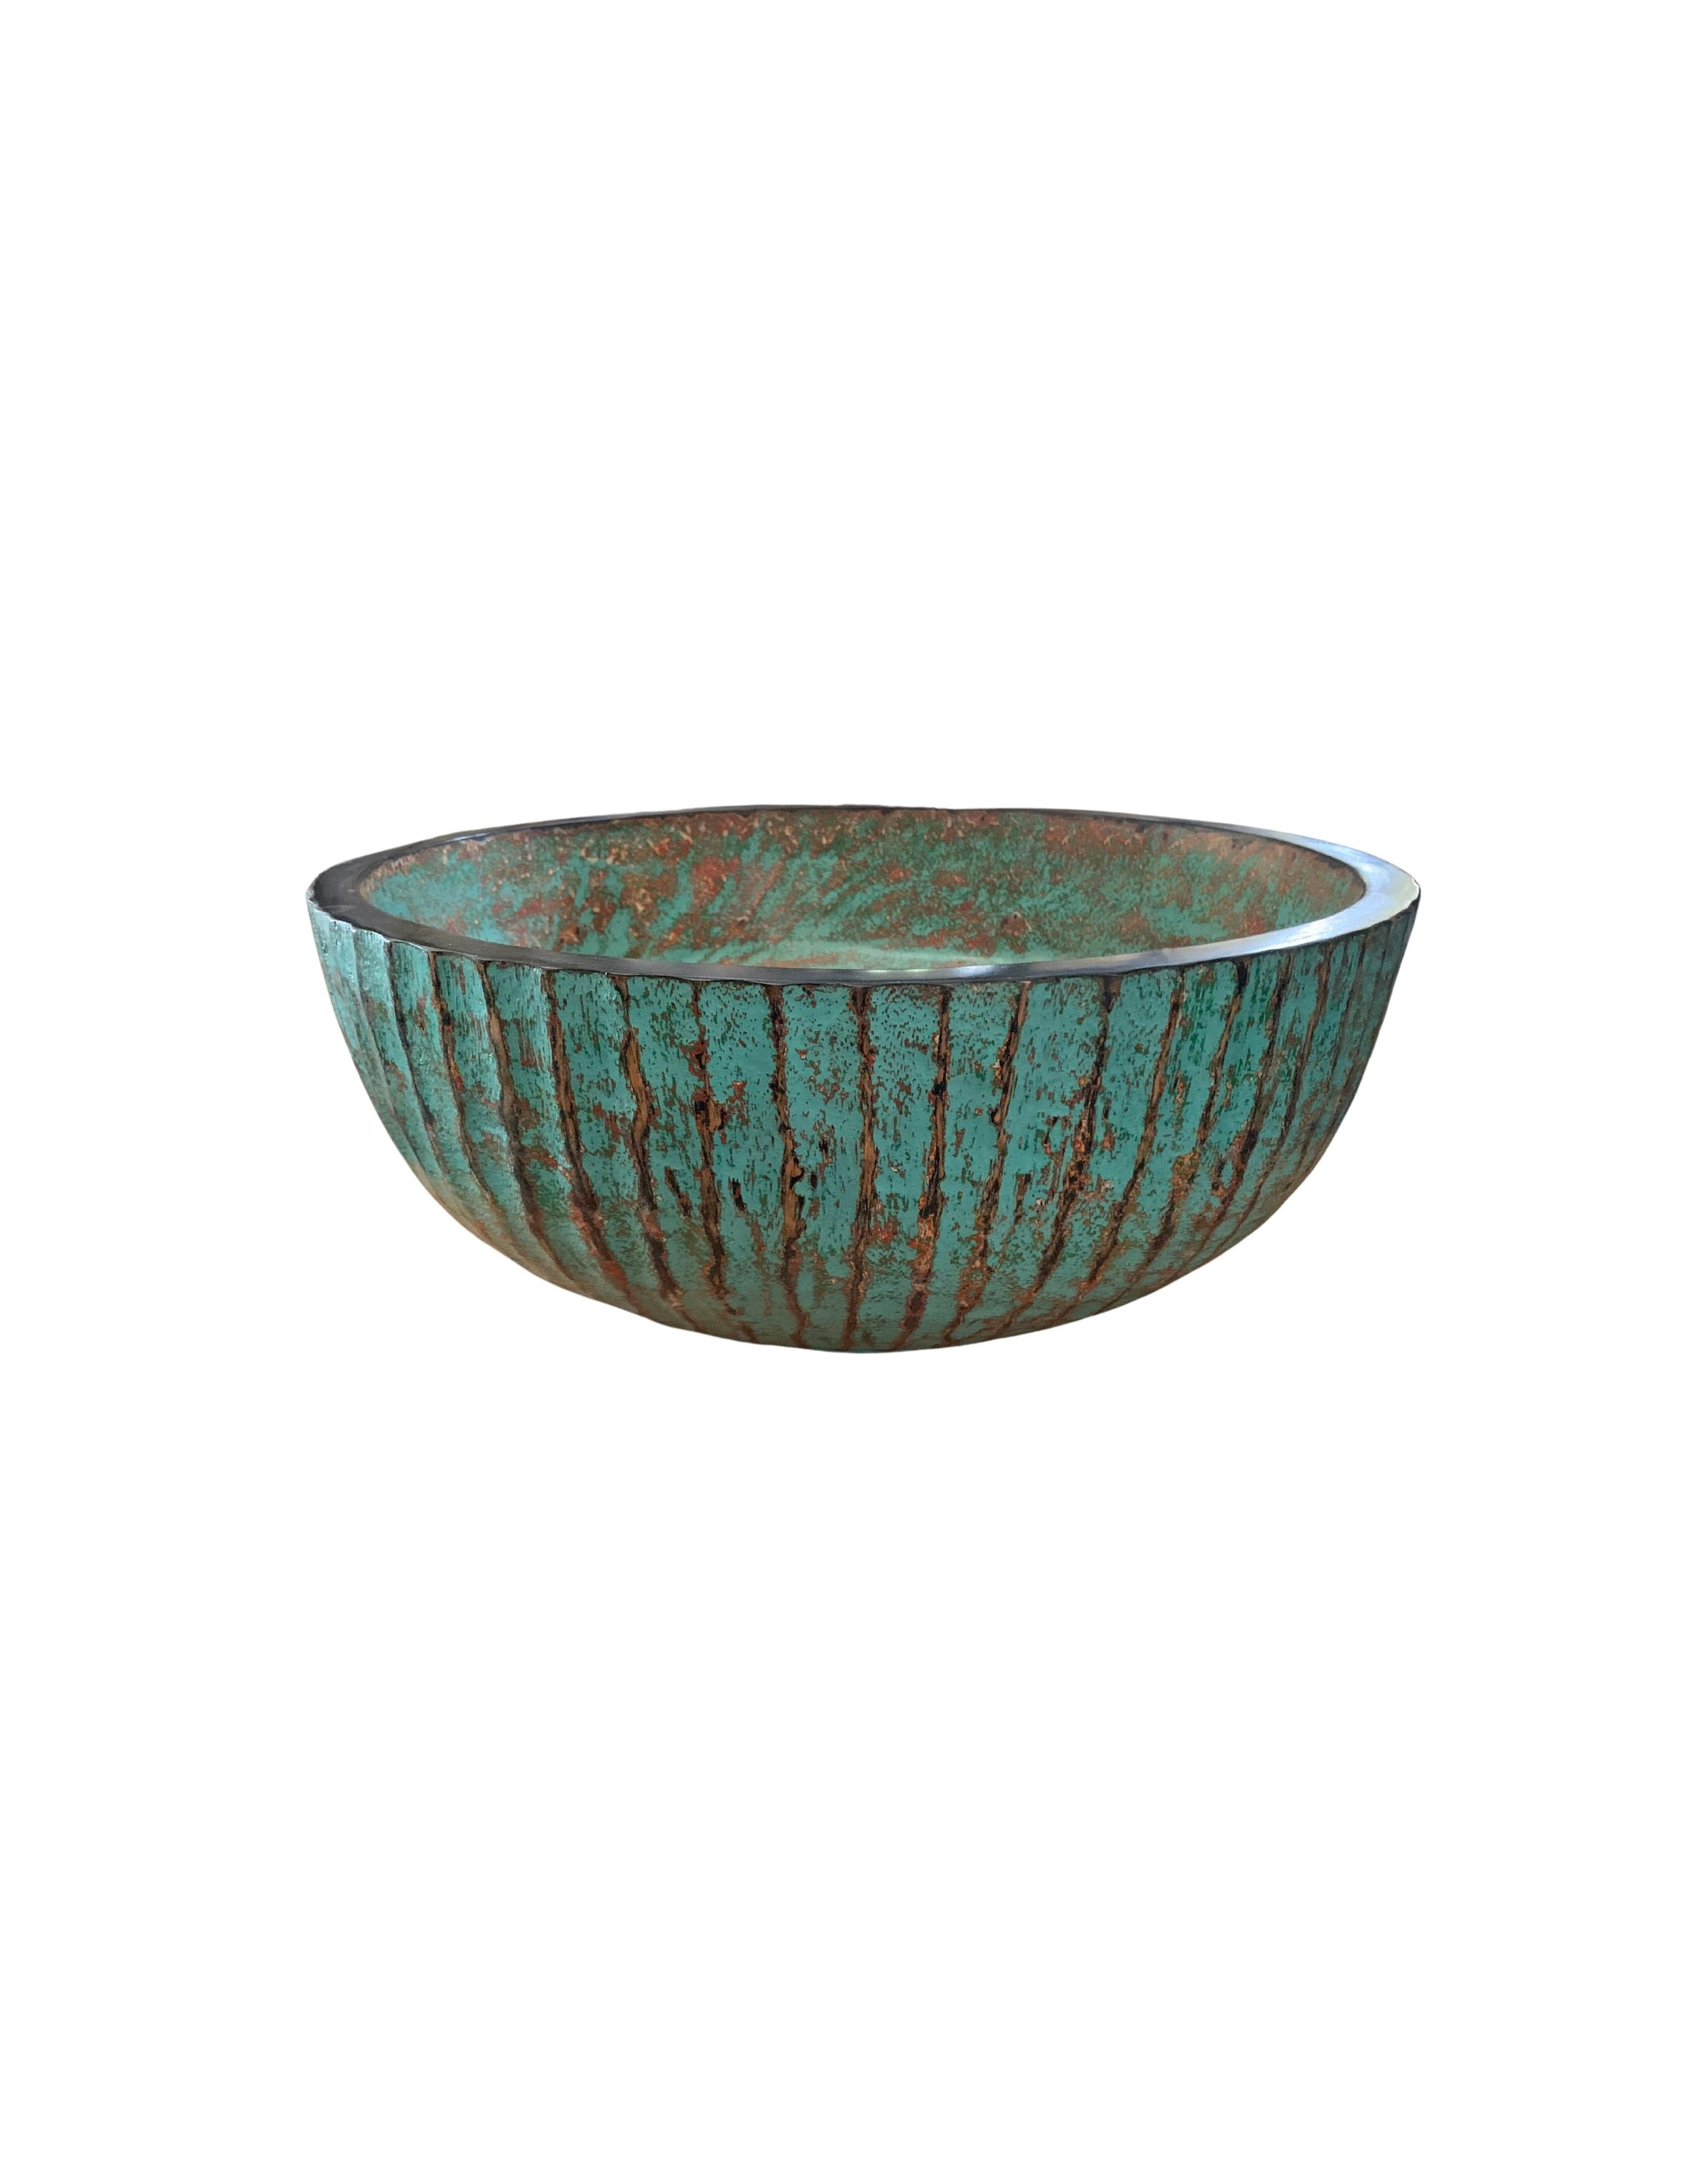 Organic Modern Solid Mango Wood Bowl with Turquoise & Black Finish